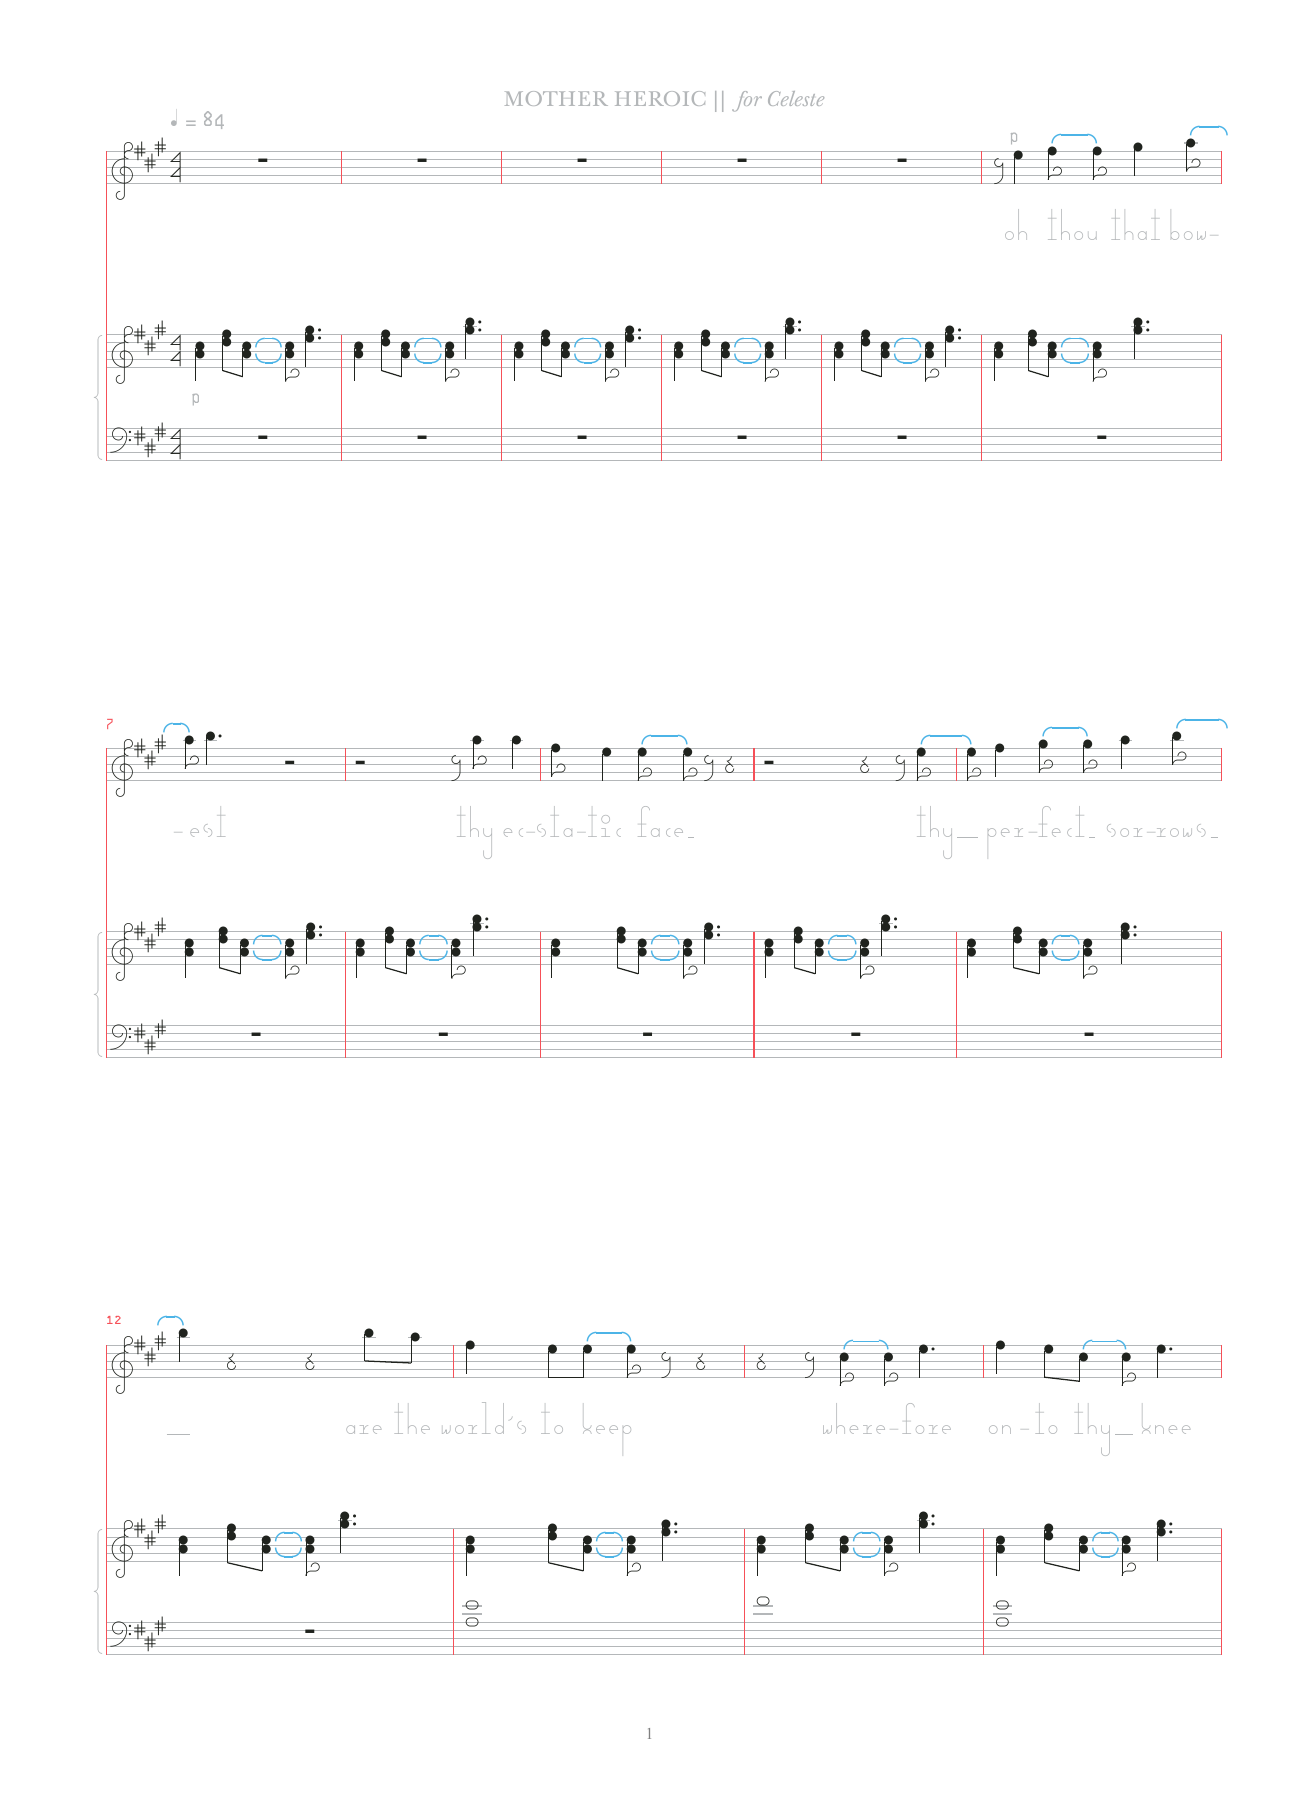 Bjork Mother Heroic Sheet Music Notes & Chords for Celeste & Vocal - Download or Print PDF